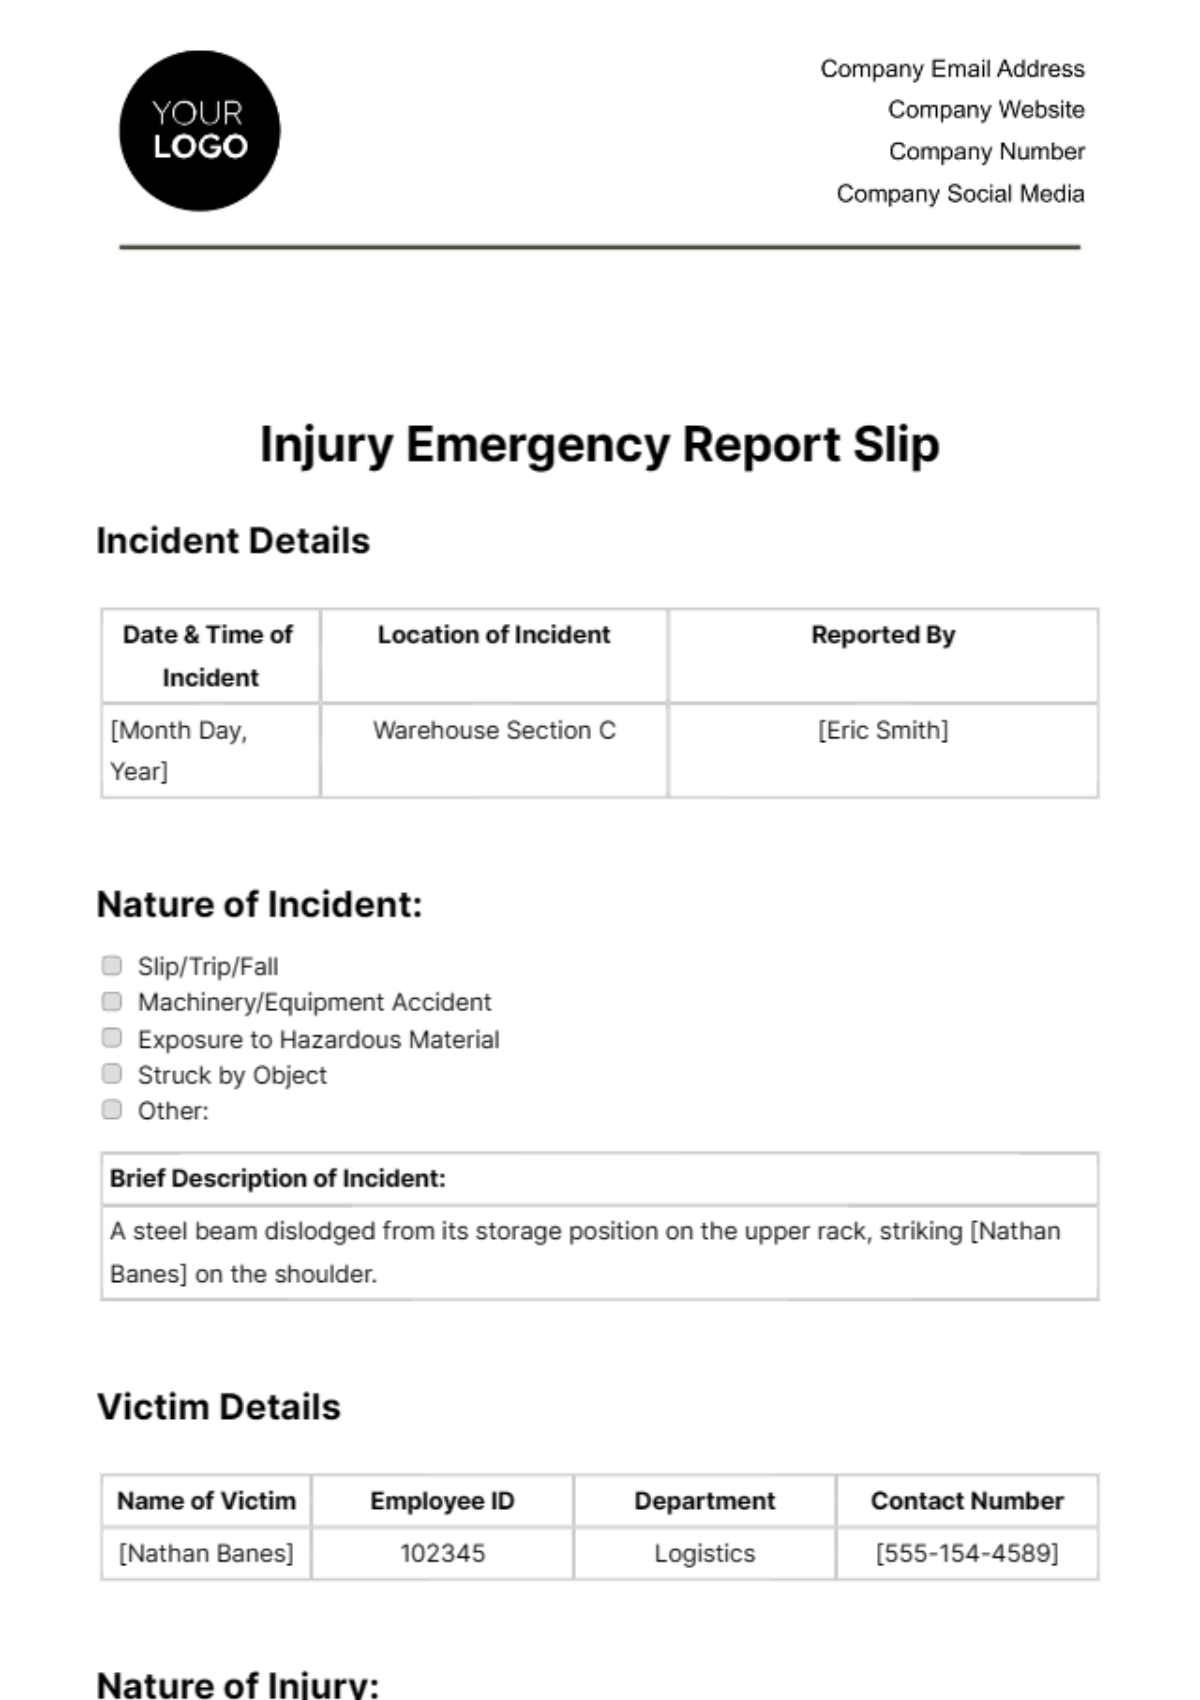 Injury Emergency Report Slip Template